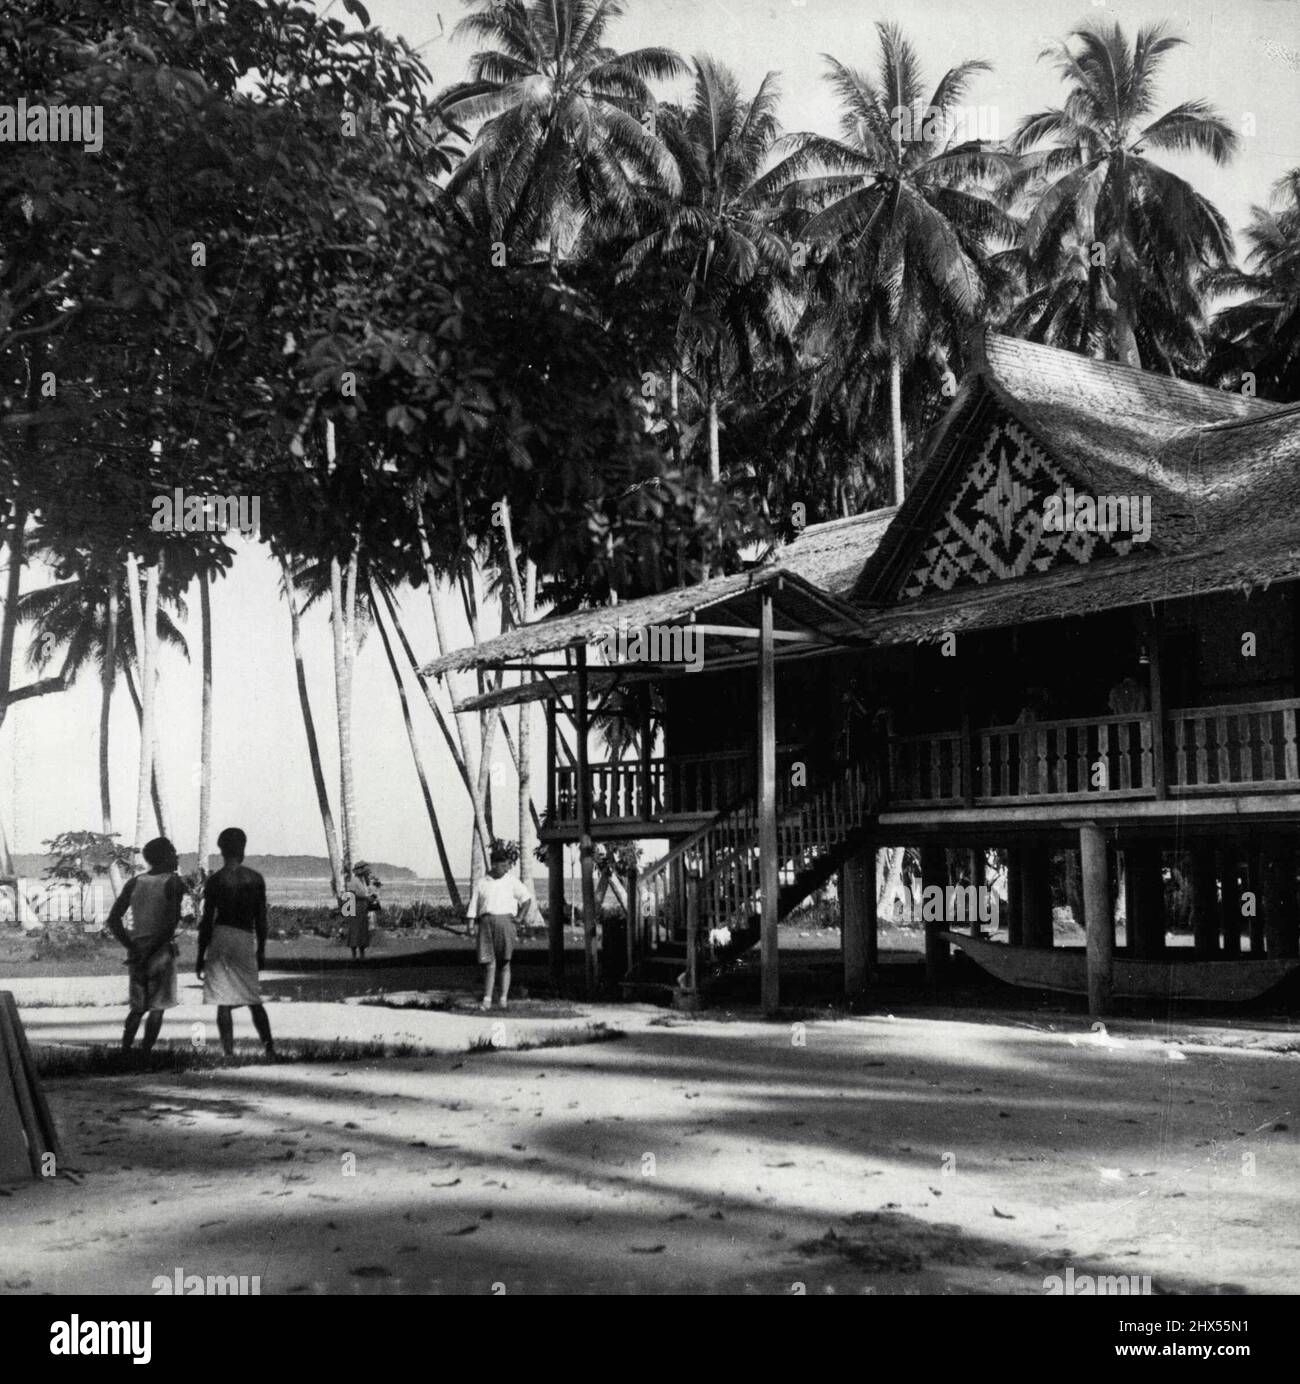 Solomon Islands - Places. August 14, 1942. (Photo by R. Lowet). Stock Photo